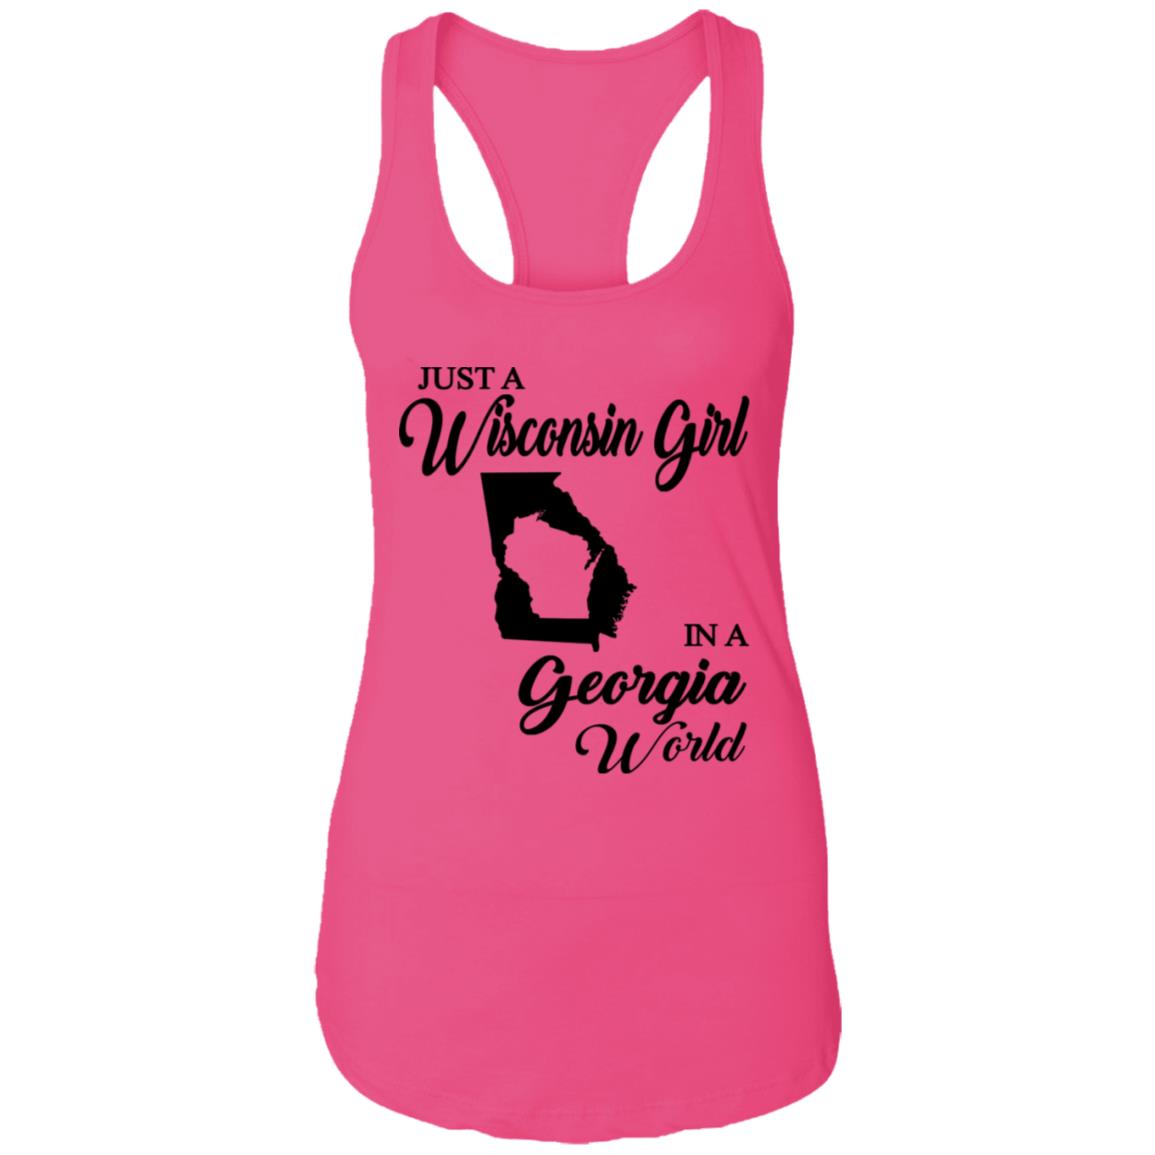 Just A Wisconsin Girl In A Georgia World T-shirt - T-shirt Teezalo